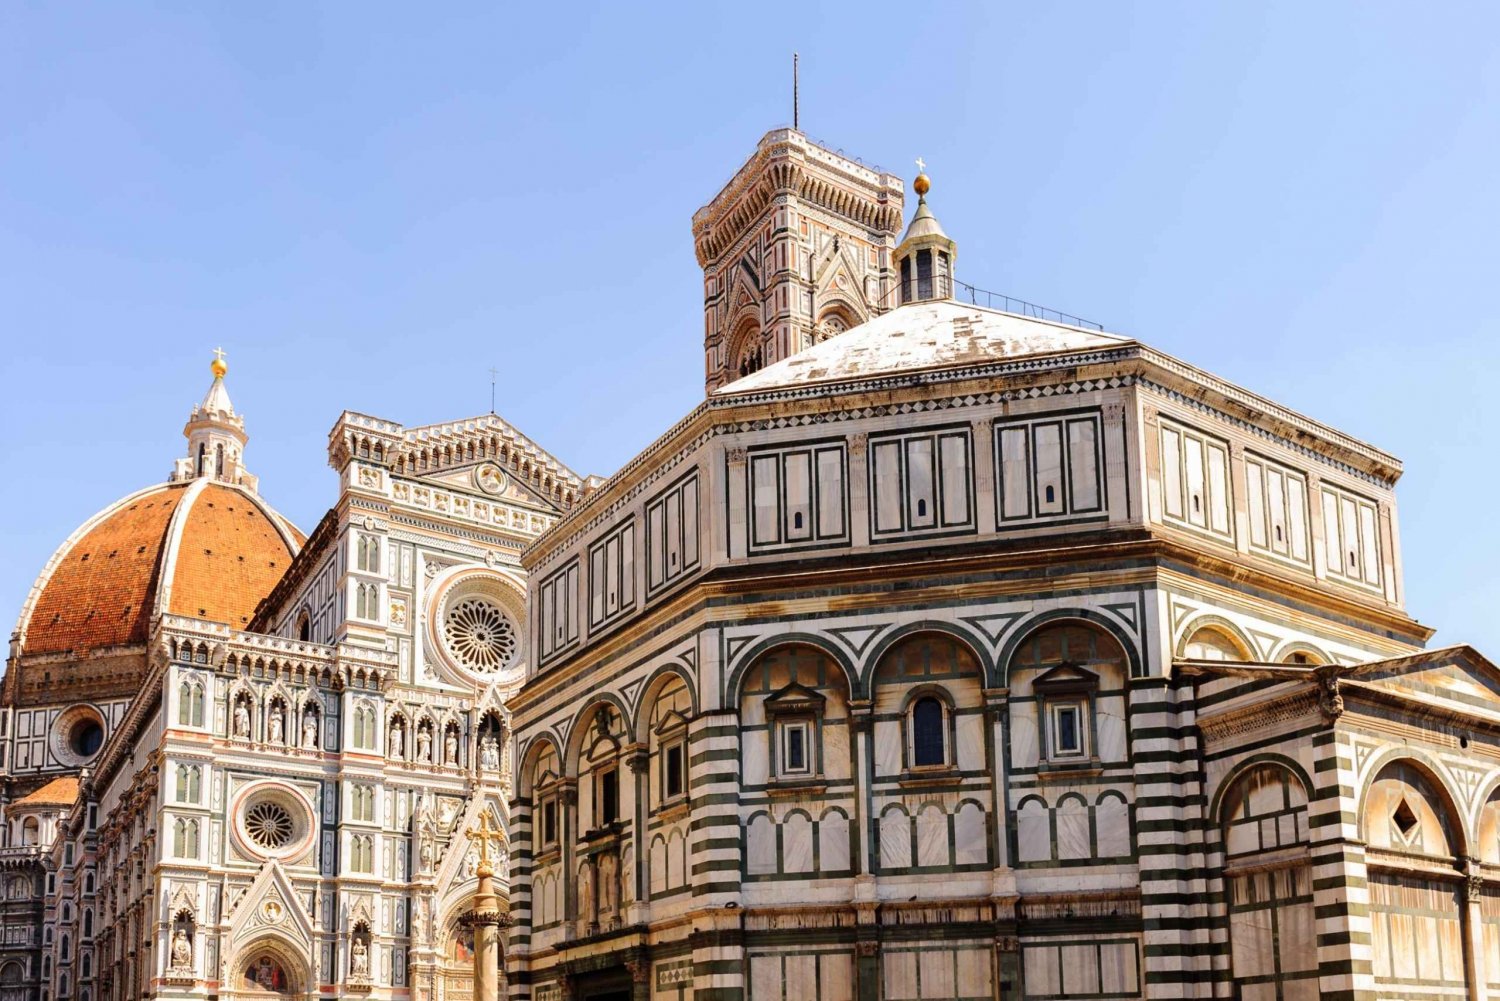 Katedralen i Florens: Guidad tur i liten grupp: Hoppa över linjen